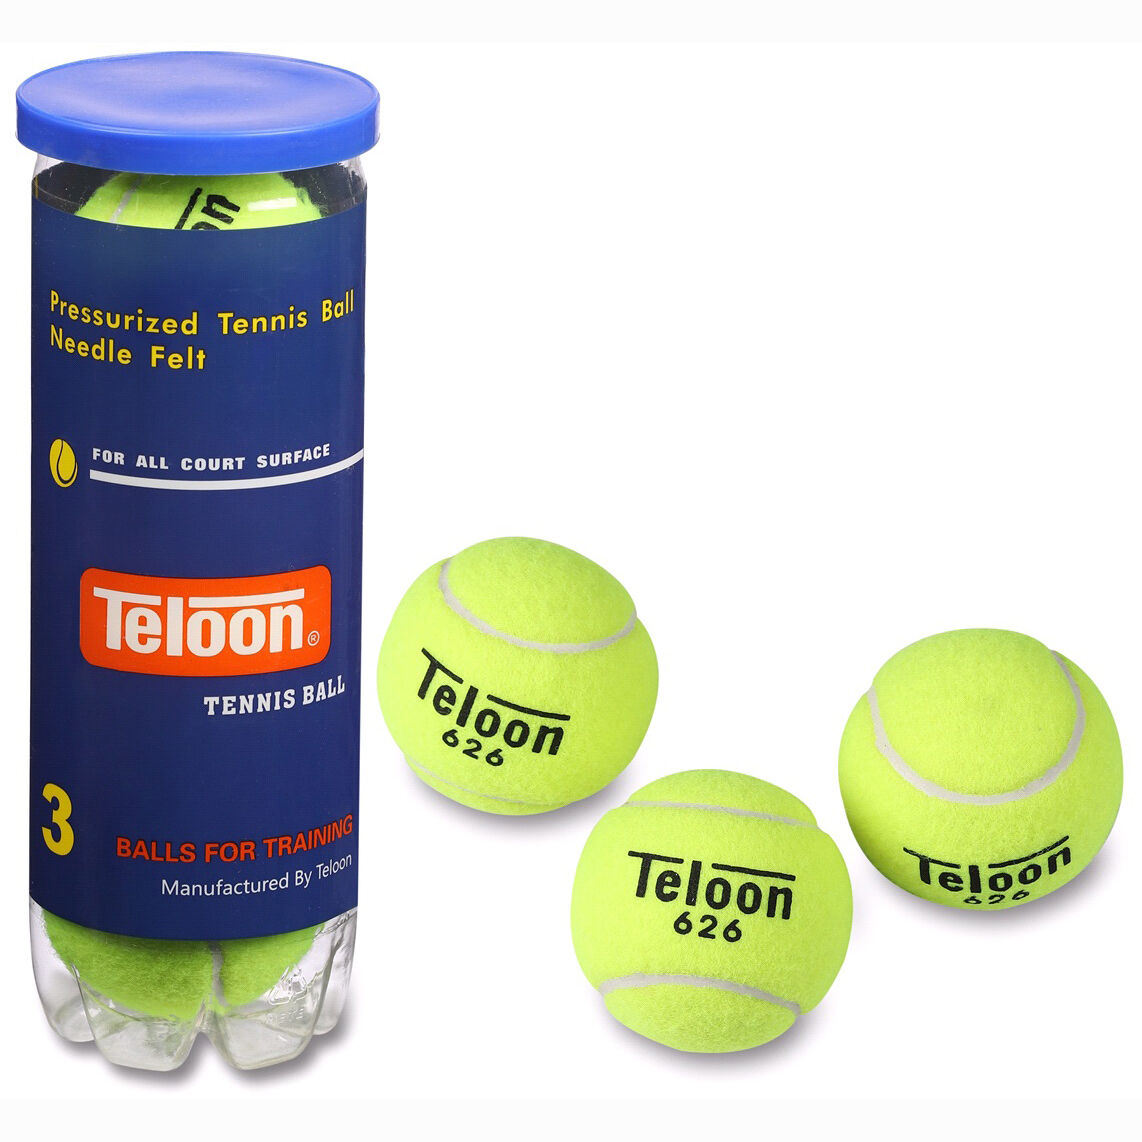 Мяч для большого тенниса Teloon 626Т Р3 (3 шт.)